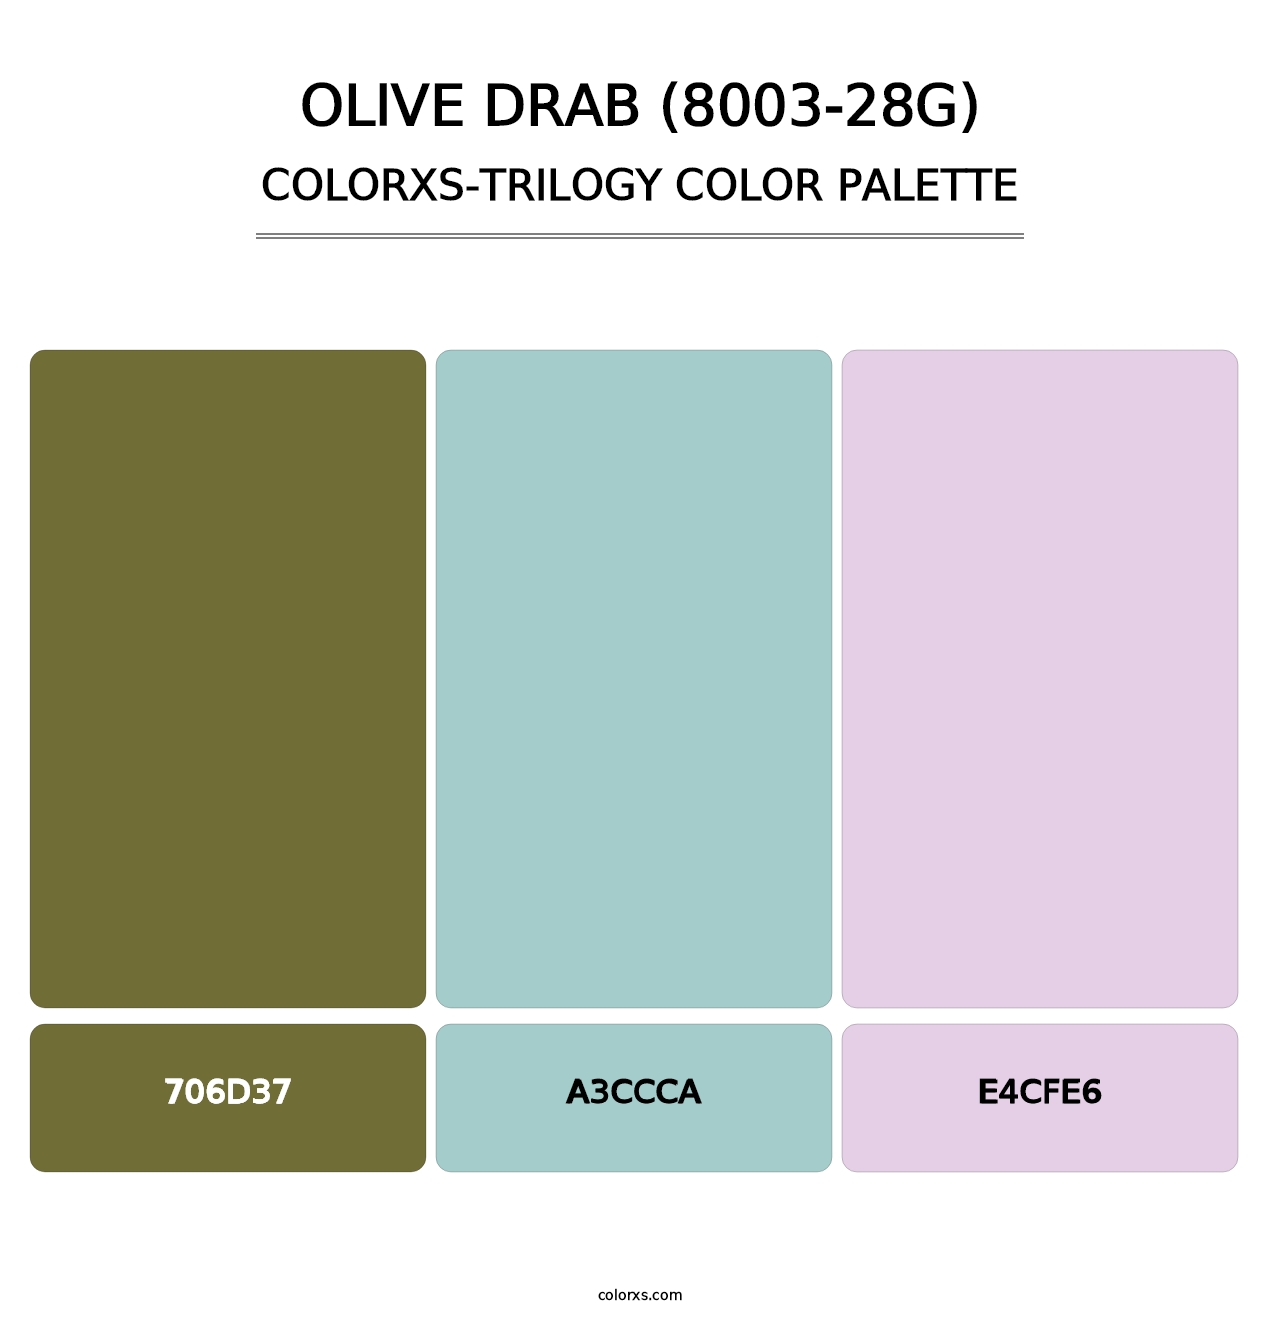 Olive Drab (8003-28G) - Colorxs Trilogy Palette